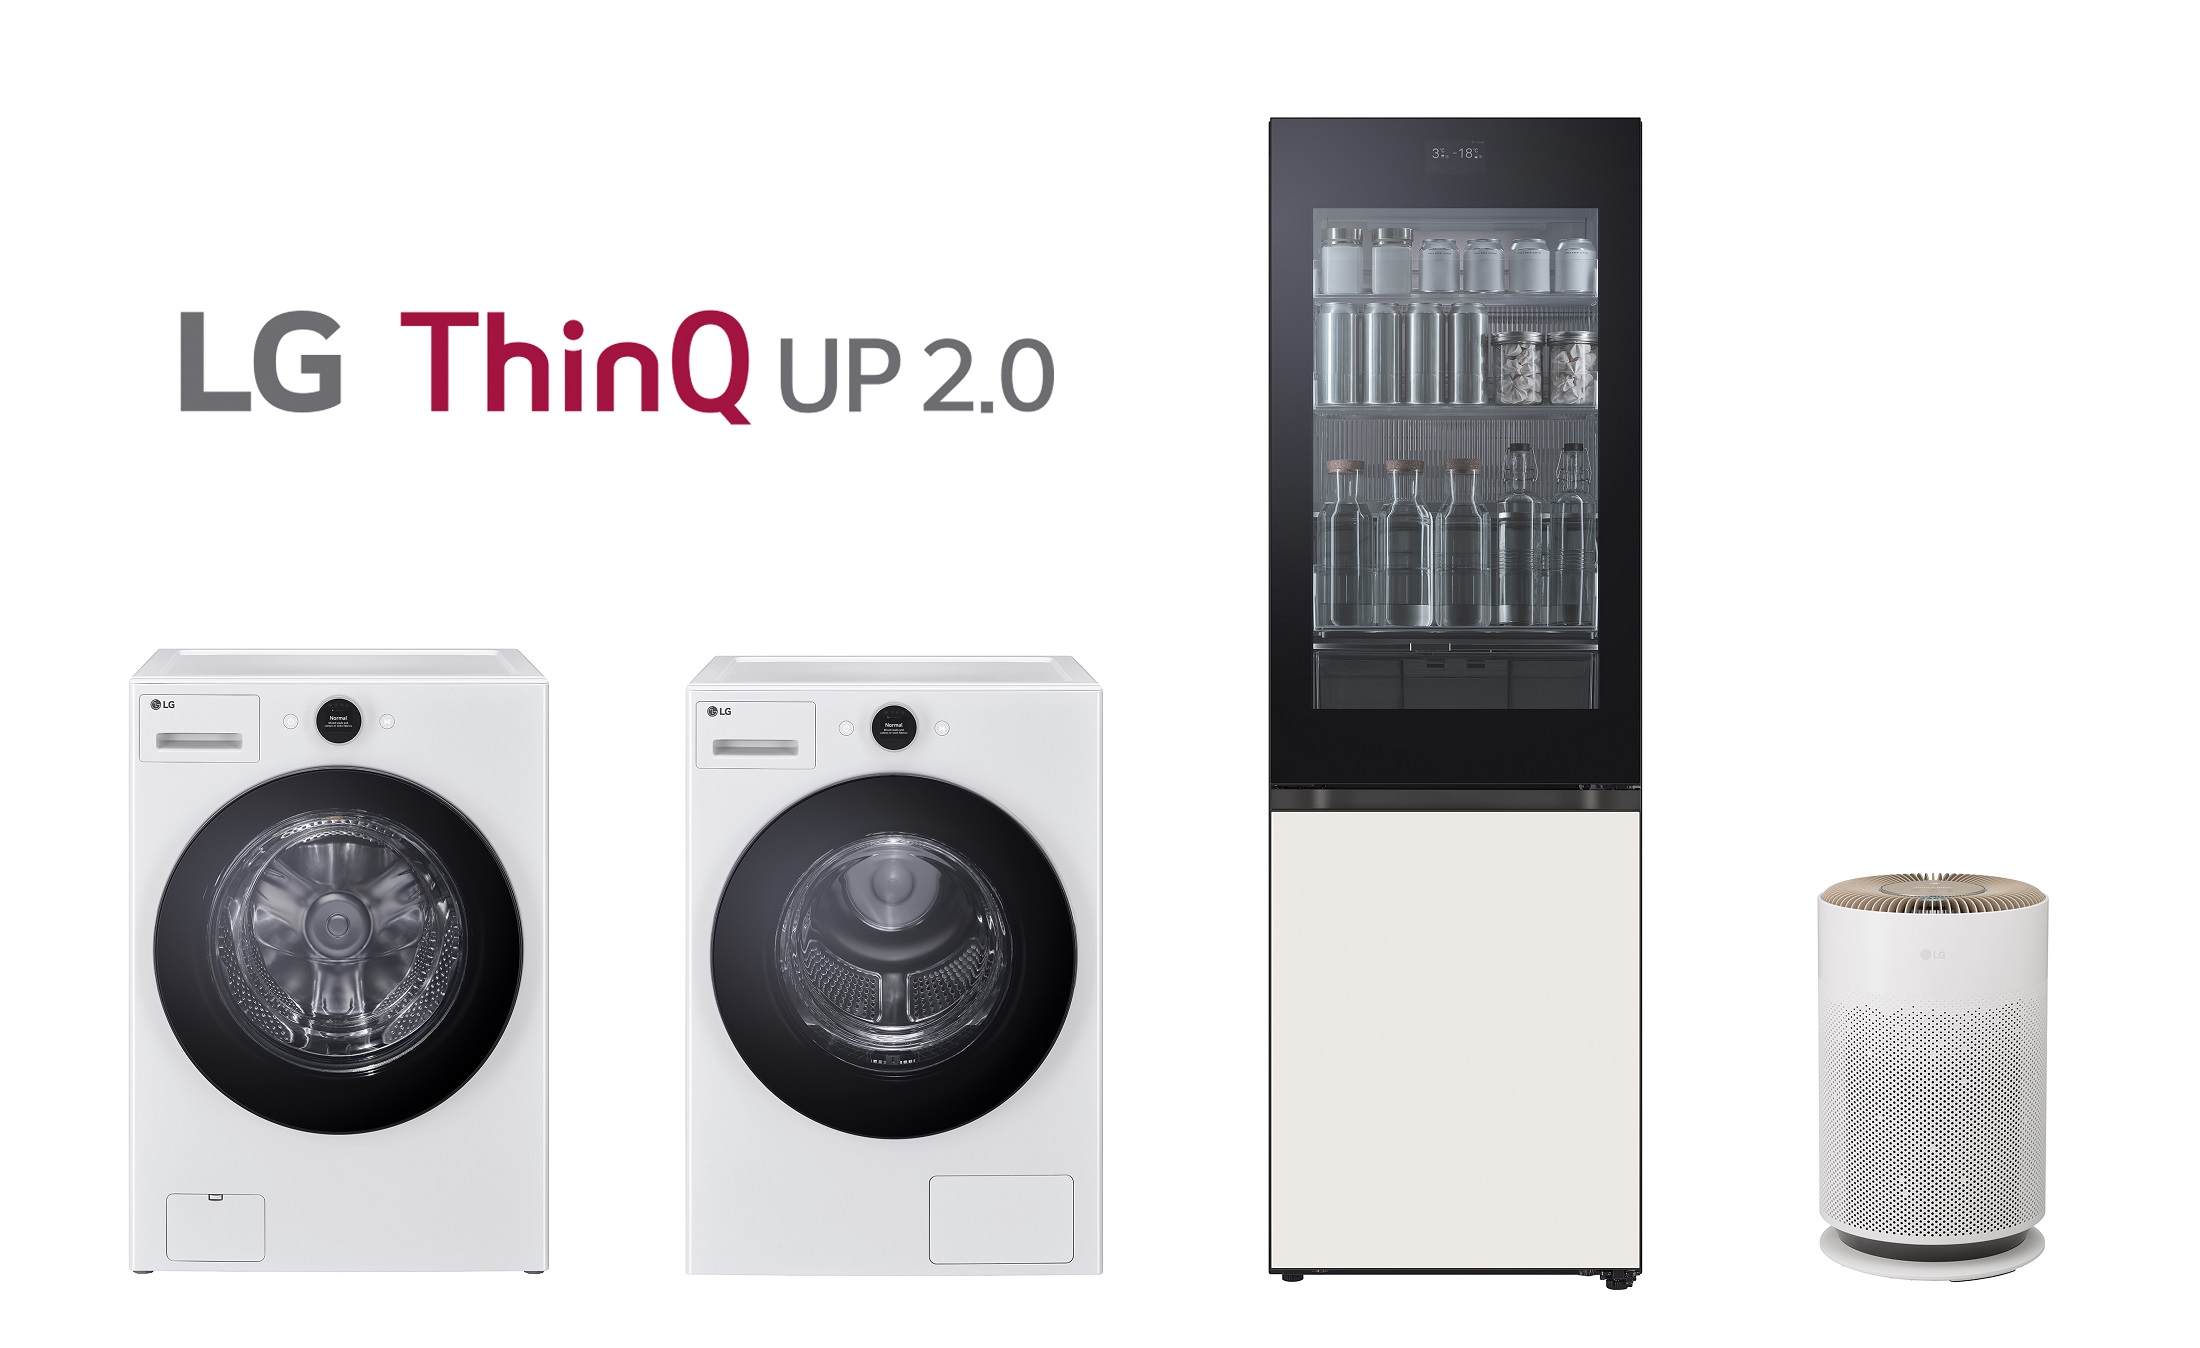 LG-ThinQ-UP-2.0-Product-Lineup_01.jpg